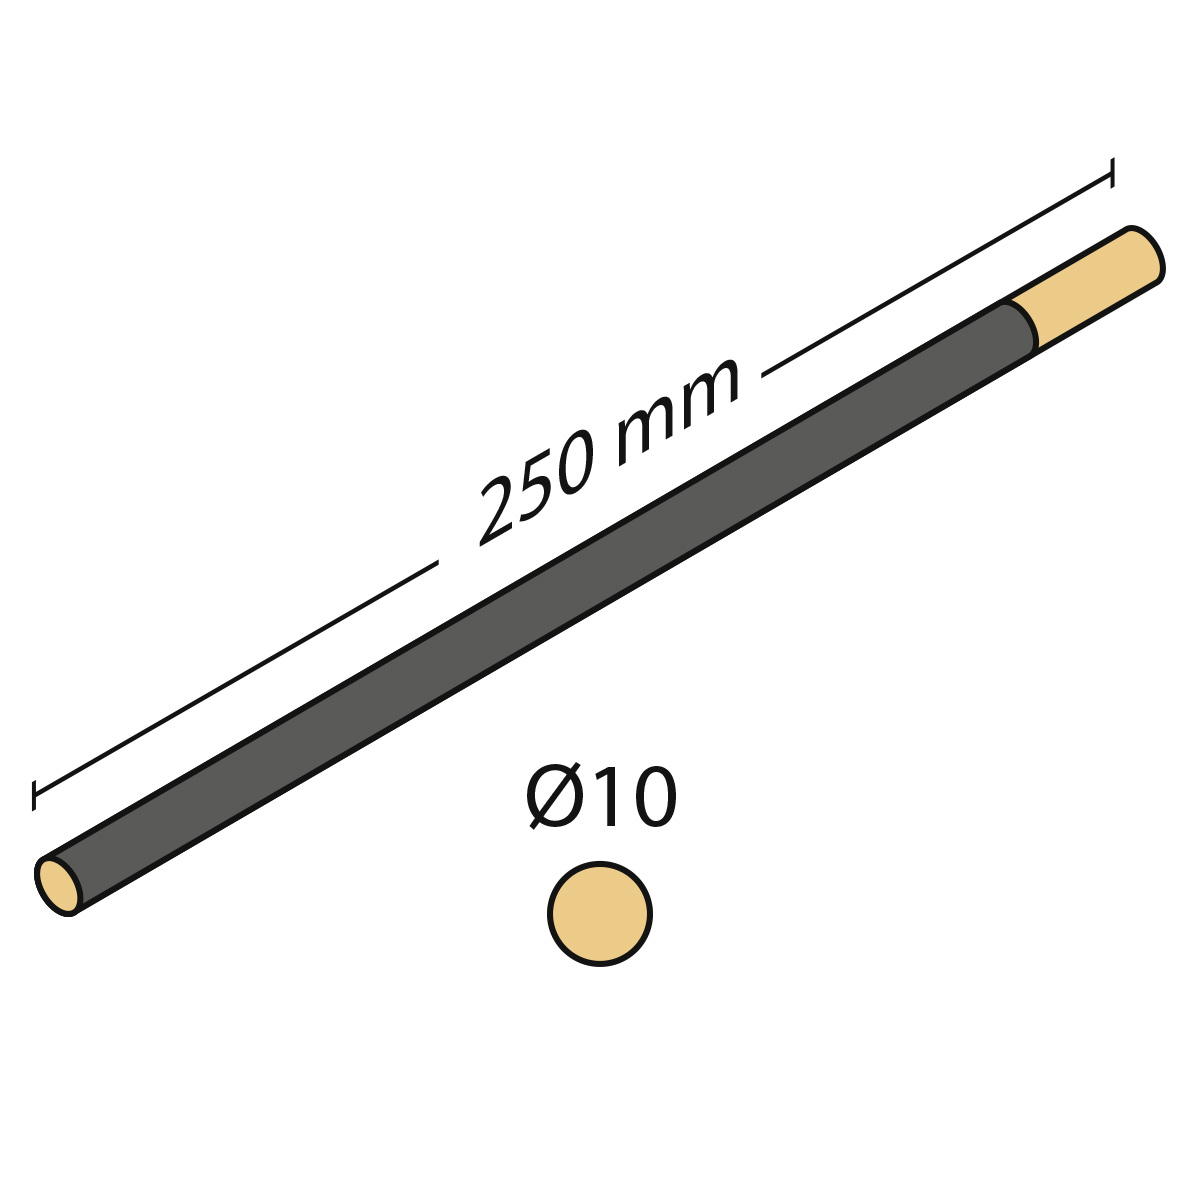 Cabron d'émeri rond, longueur 250 mm, Ø 10 mm, moyen, grain 80